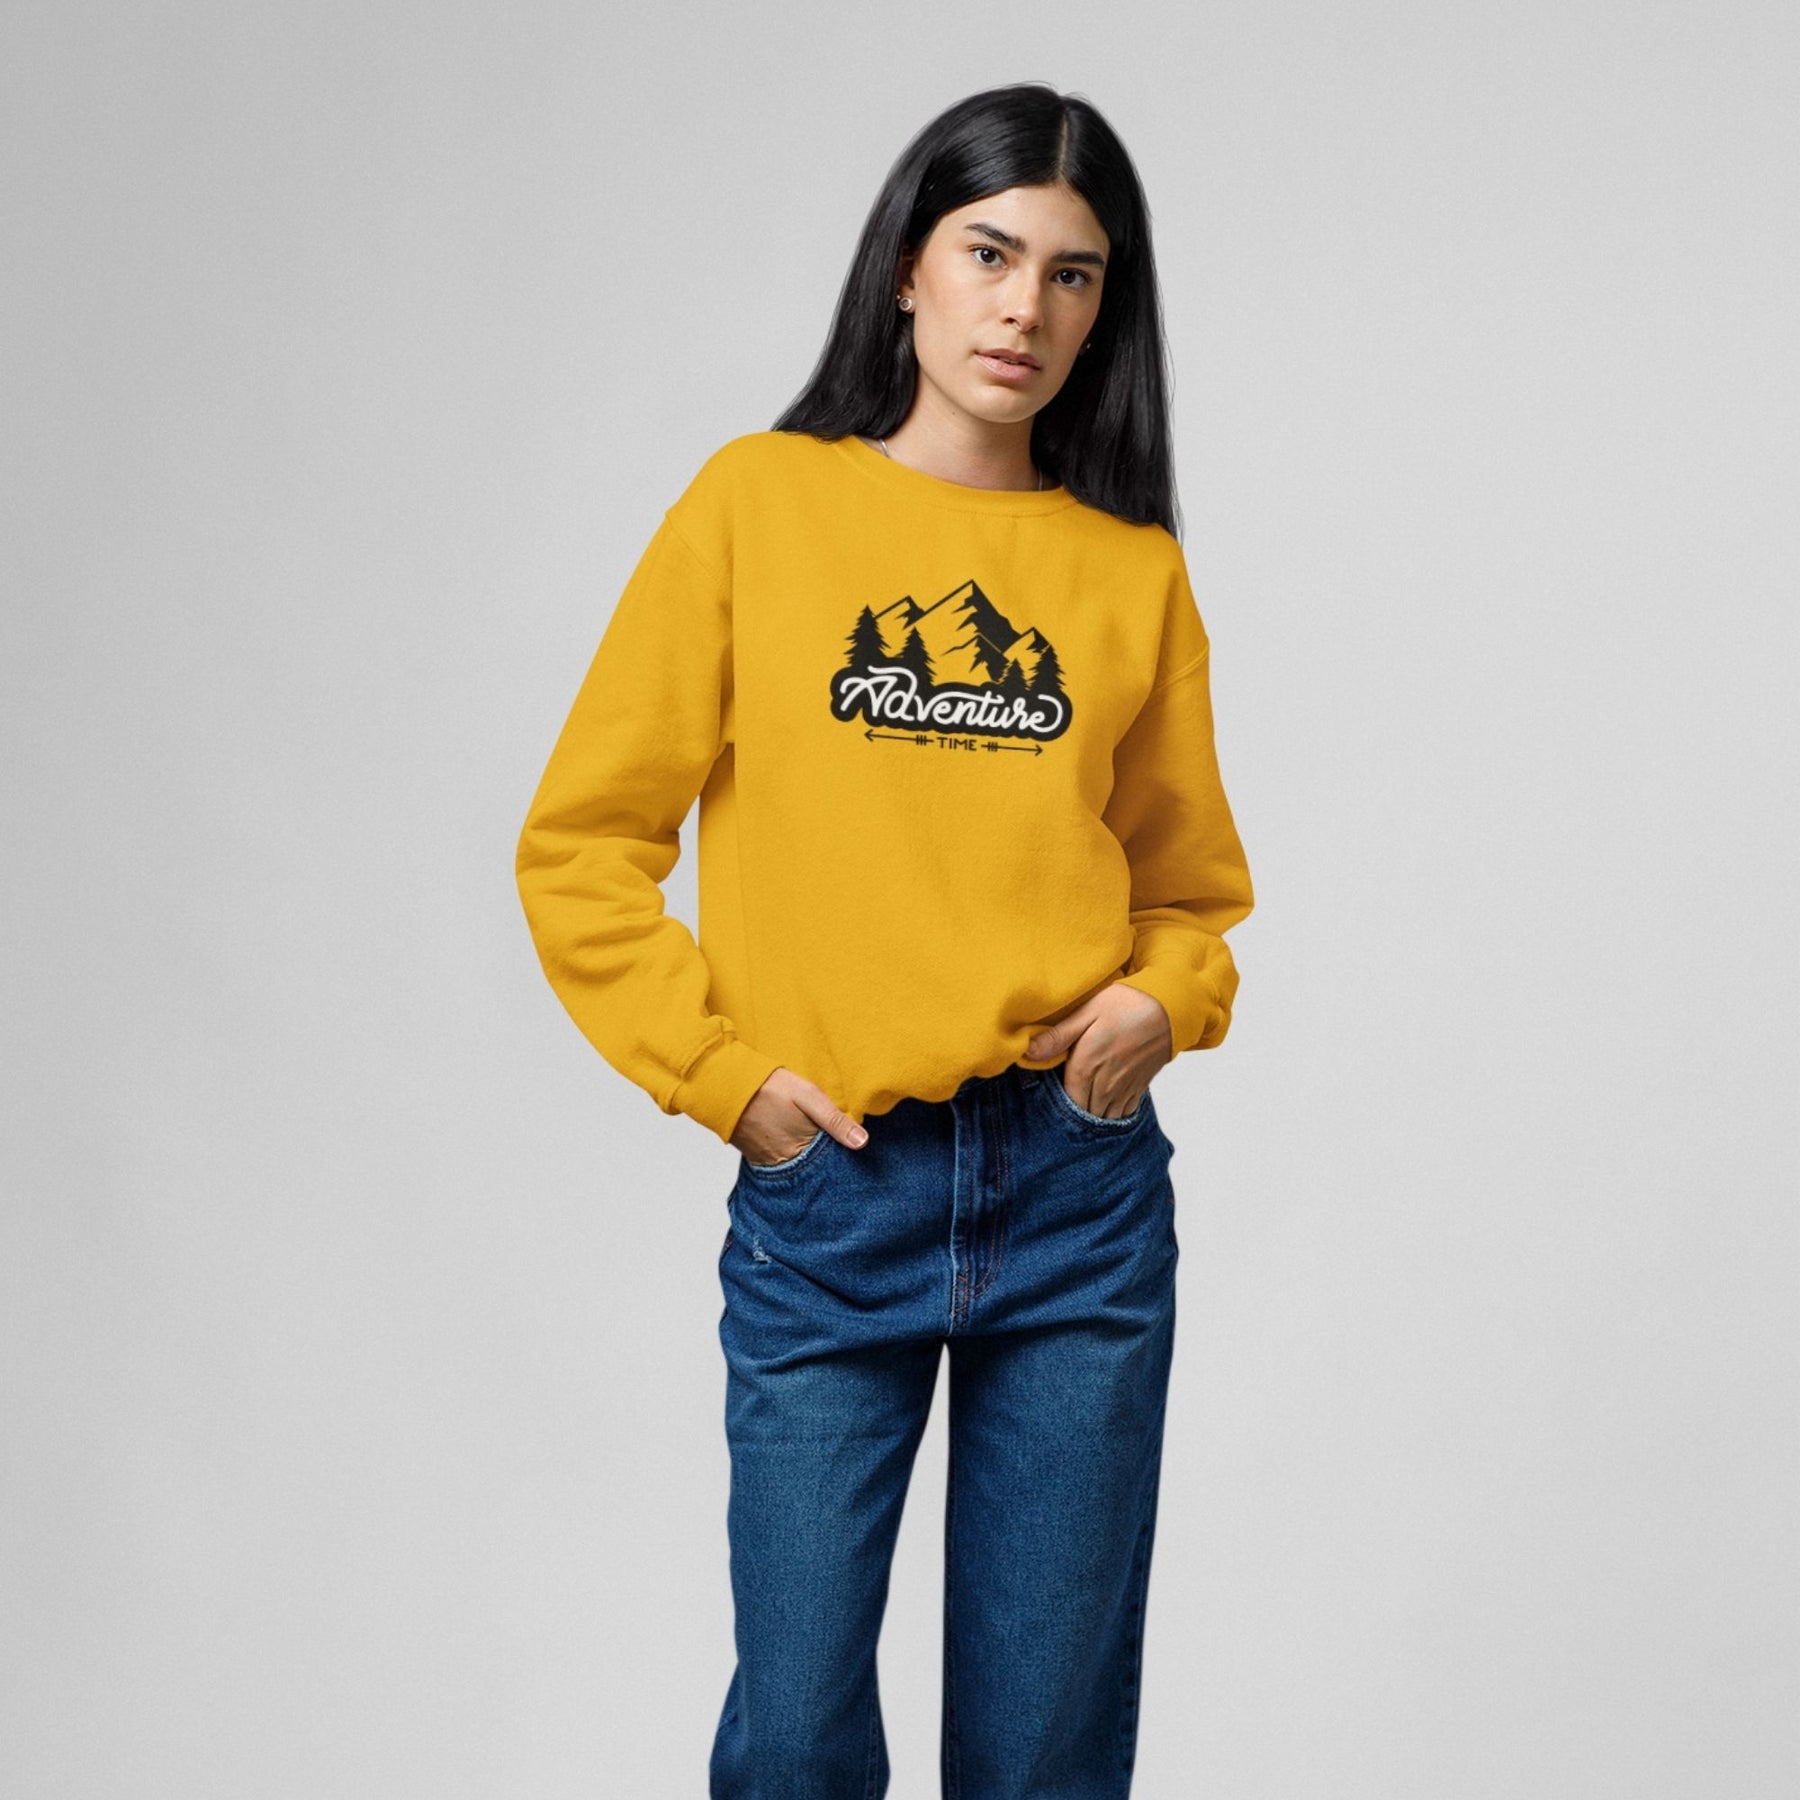 Adventure-cotton-printed-unisex-golden-yellow-sweatshirt-female-model-gogirgit-com